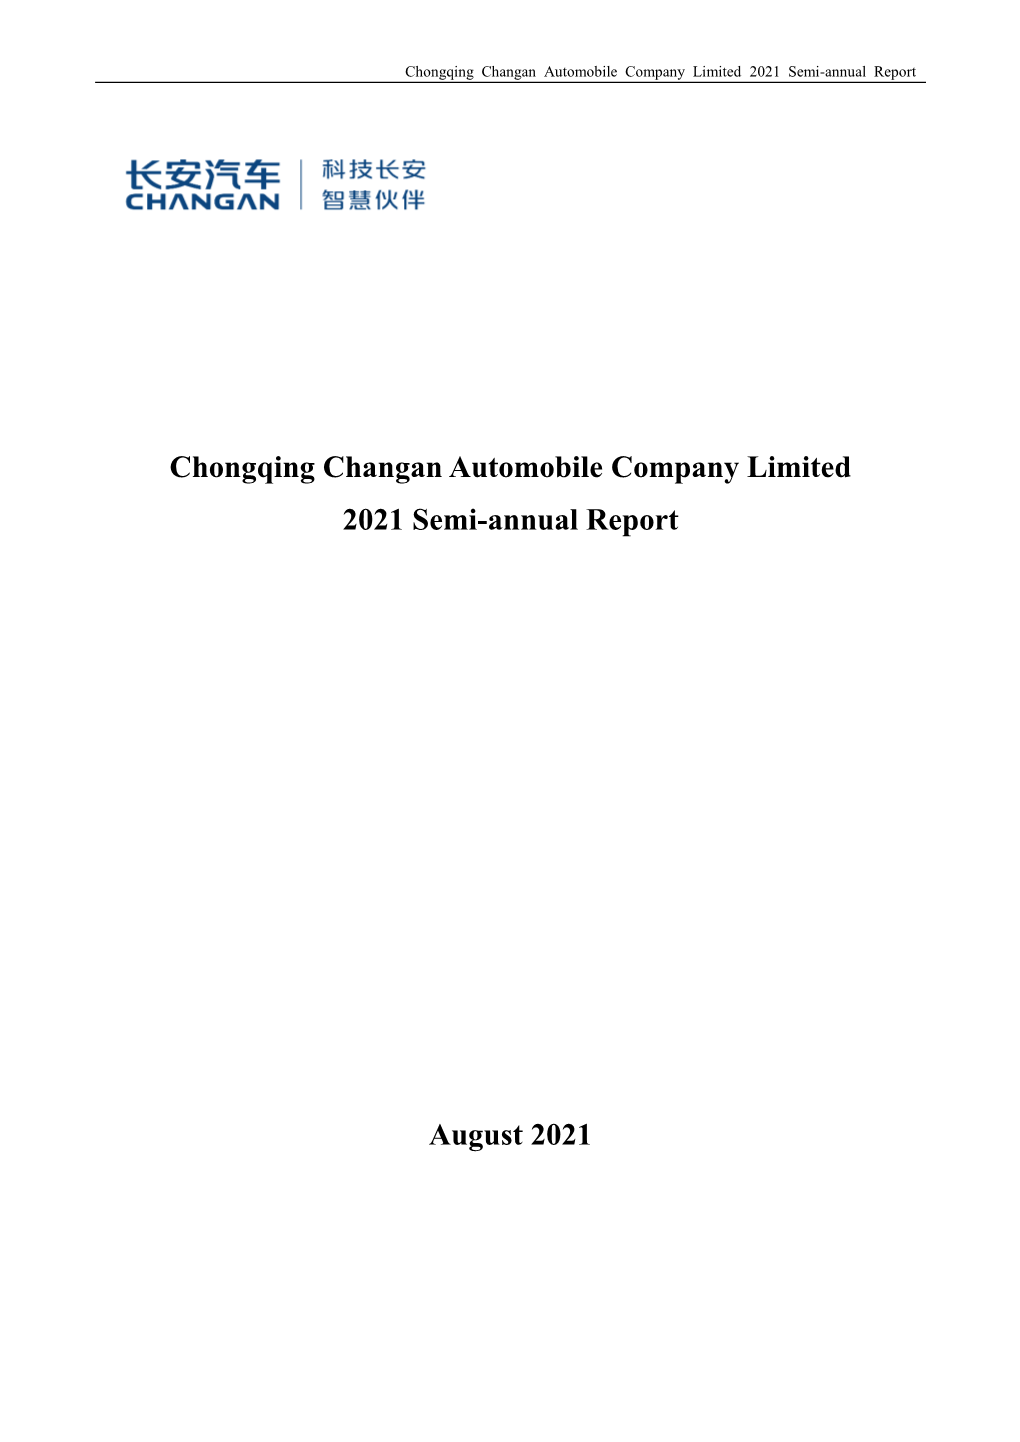 Chongqing Changan Automobile Company Limited 2021 Semi-Annual Report